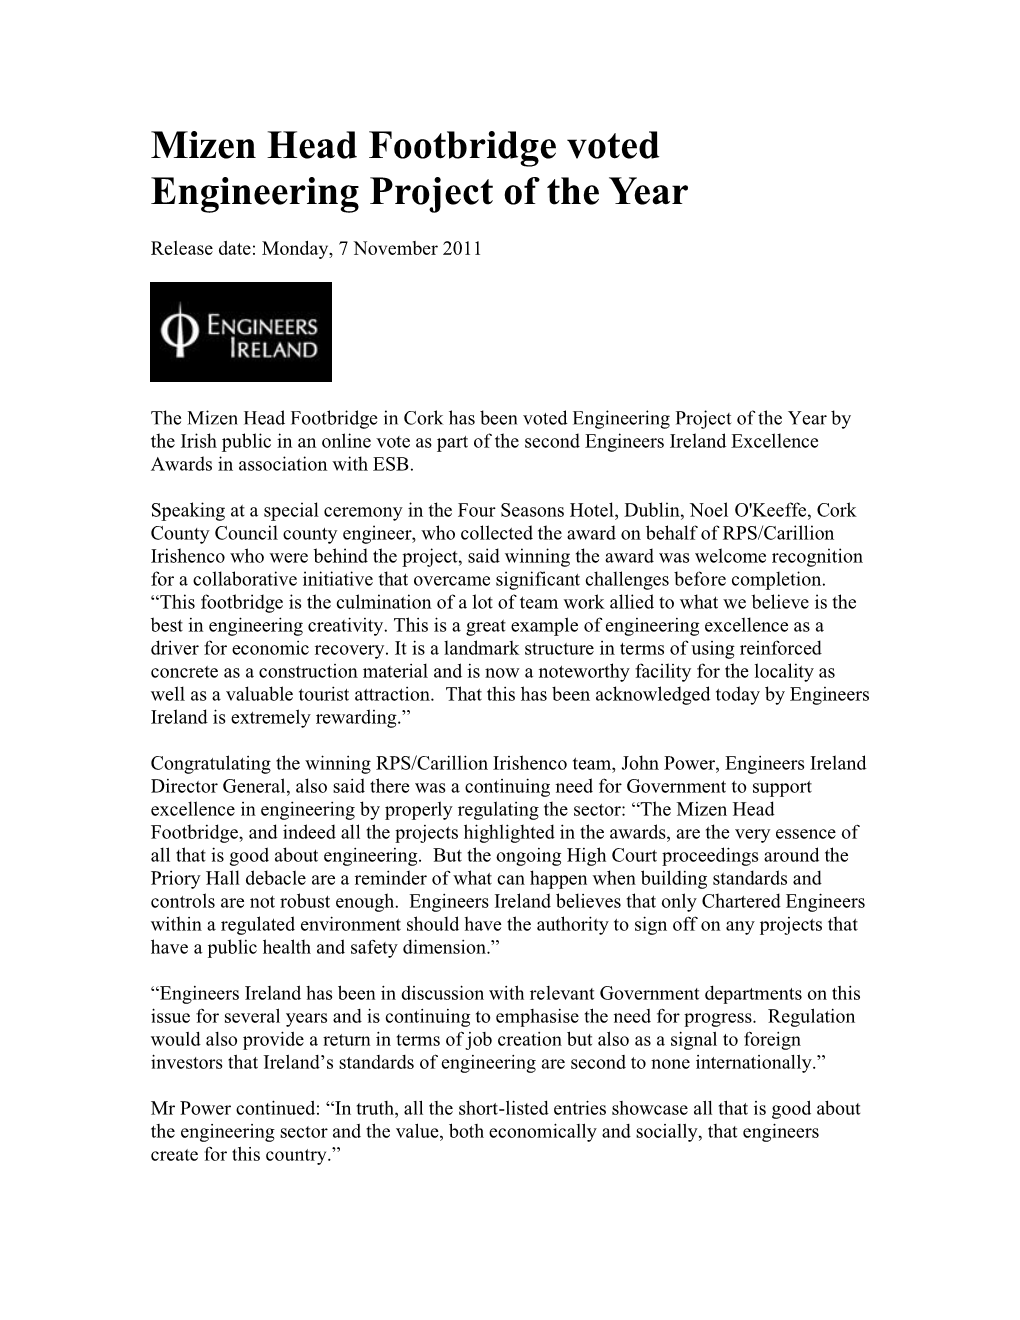 Mizen Head Footbridge Voted Engineering Project of the Year